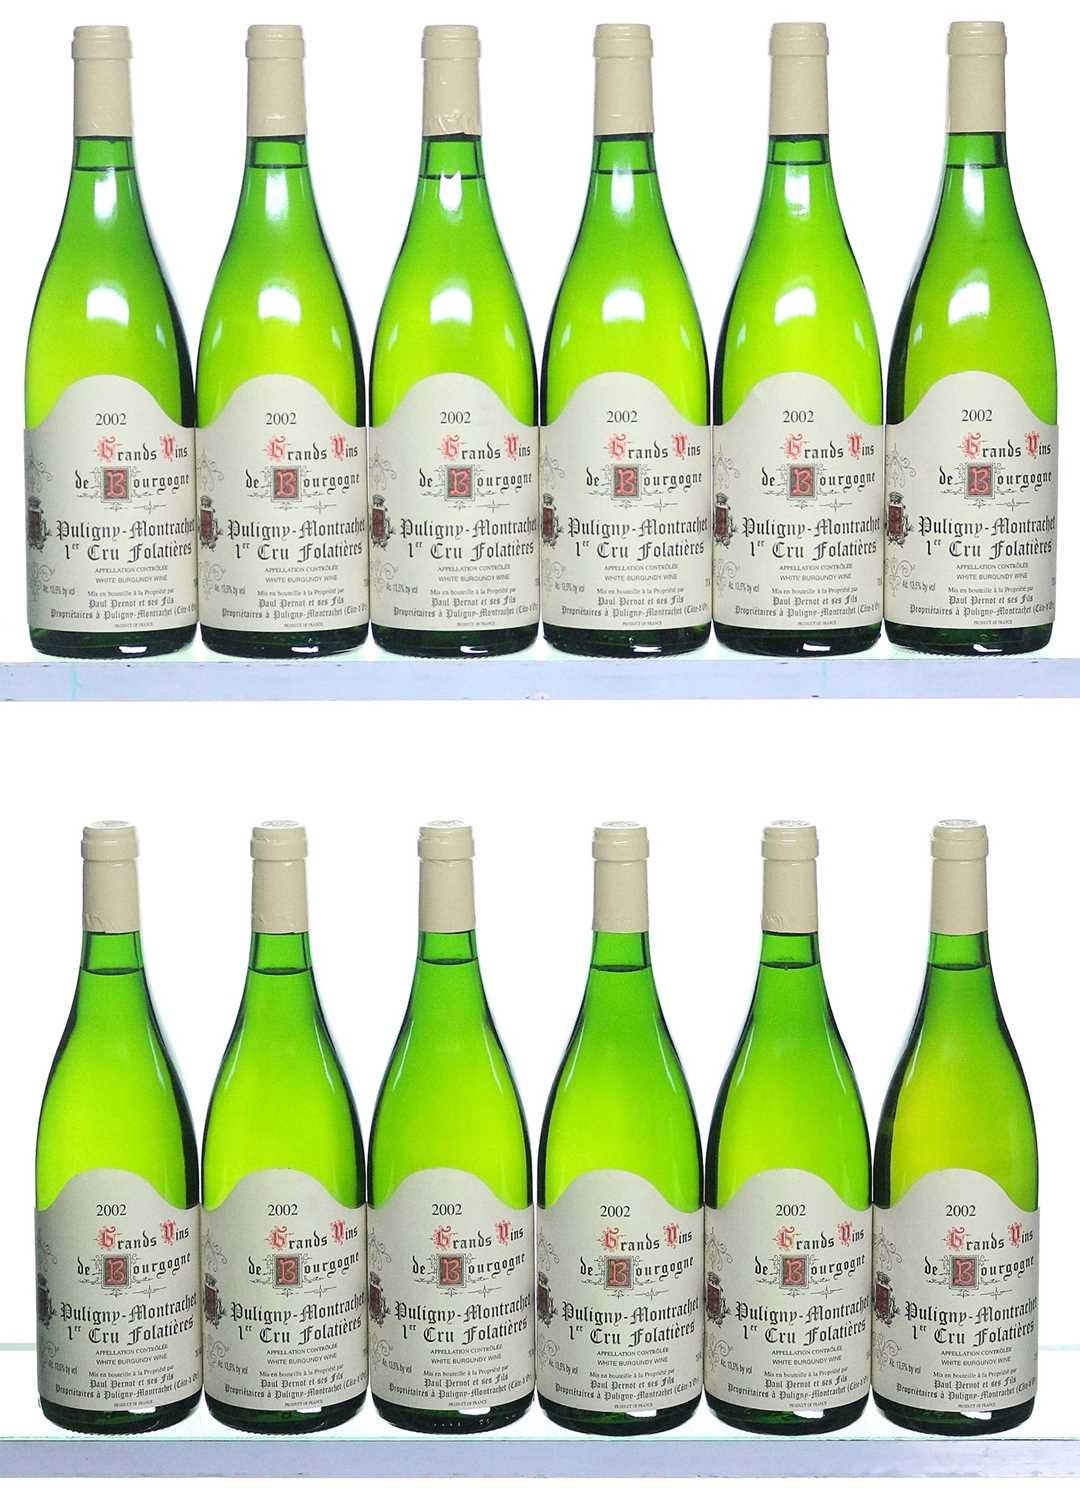 Lot 152 - 12 bottles 2002 Puligny-Montrachet Folatieres Pernot